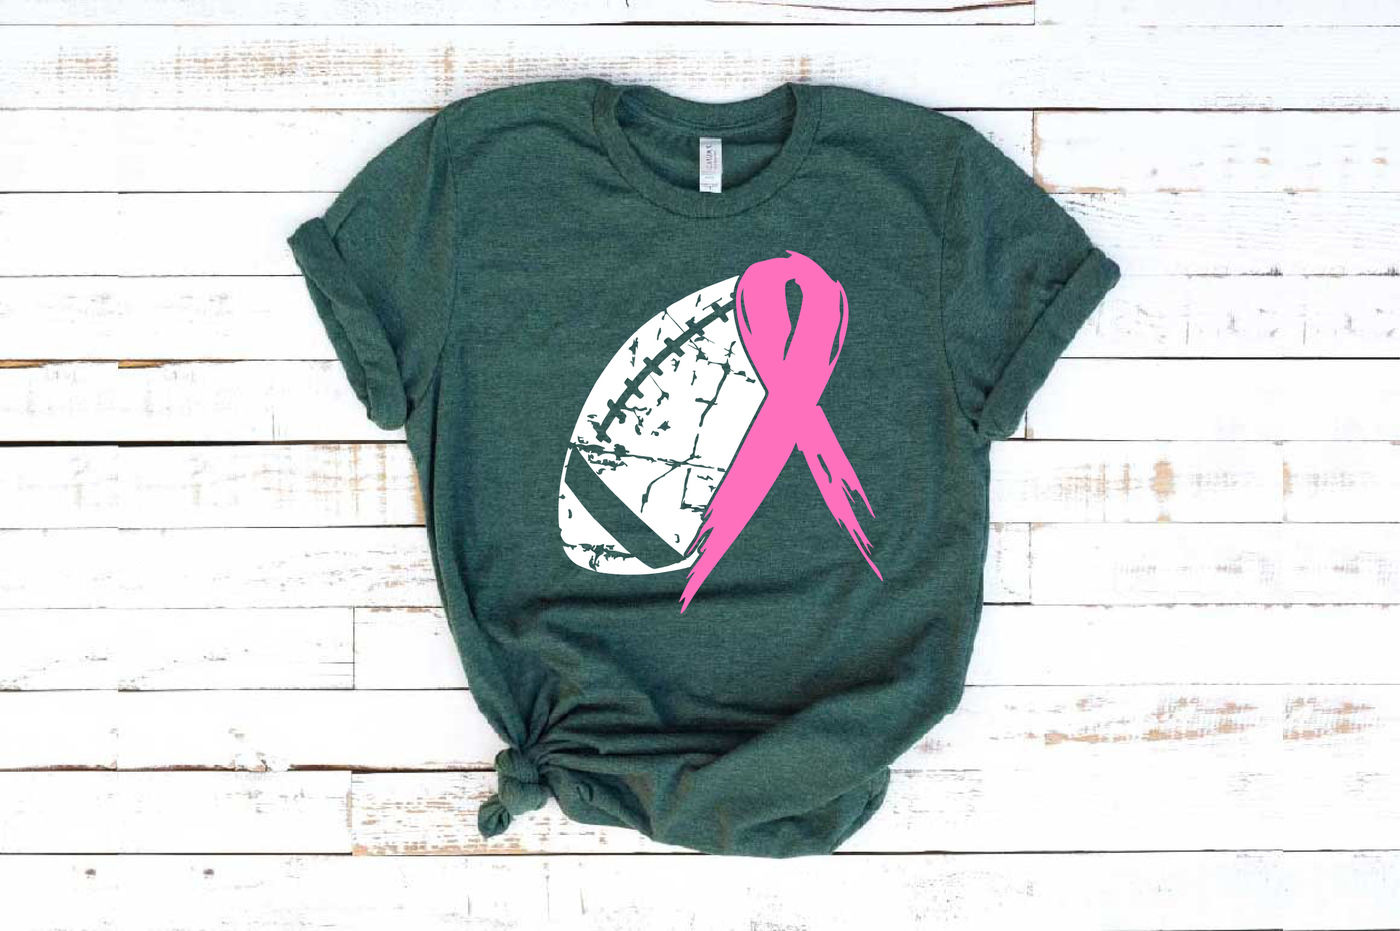 Tackle Breast Cancer Football Slang Cancer Awareness Unisex T-Shirt